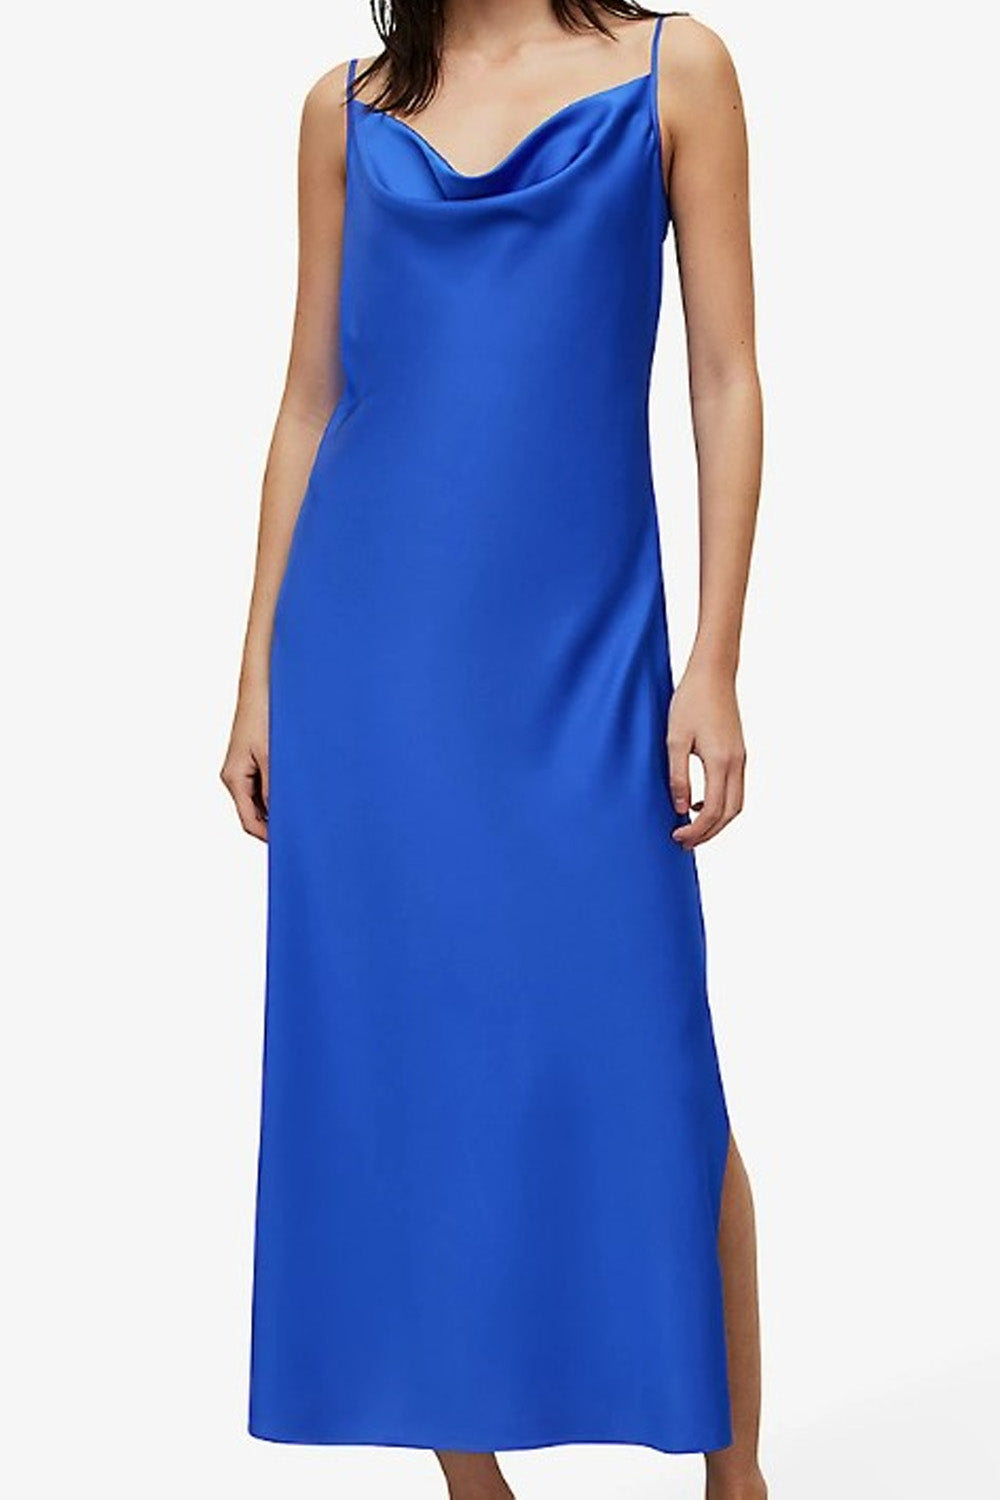 Serenity  Blue Dress